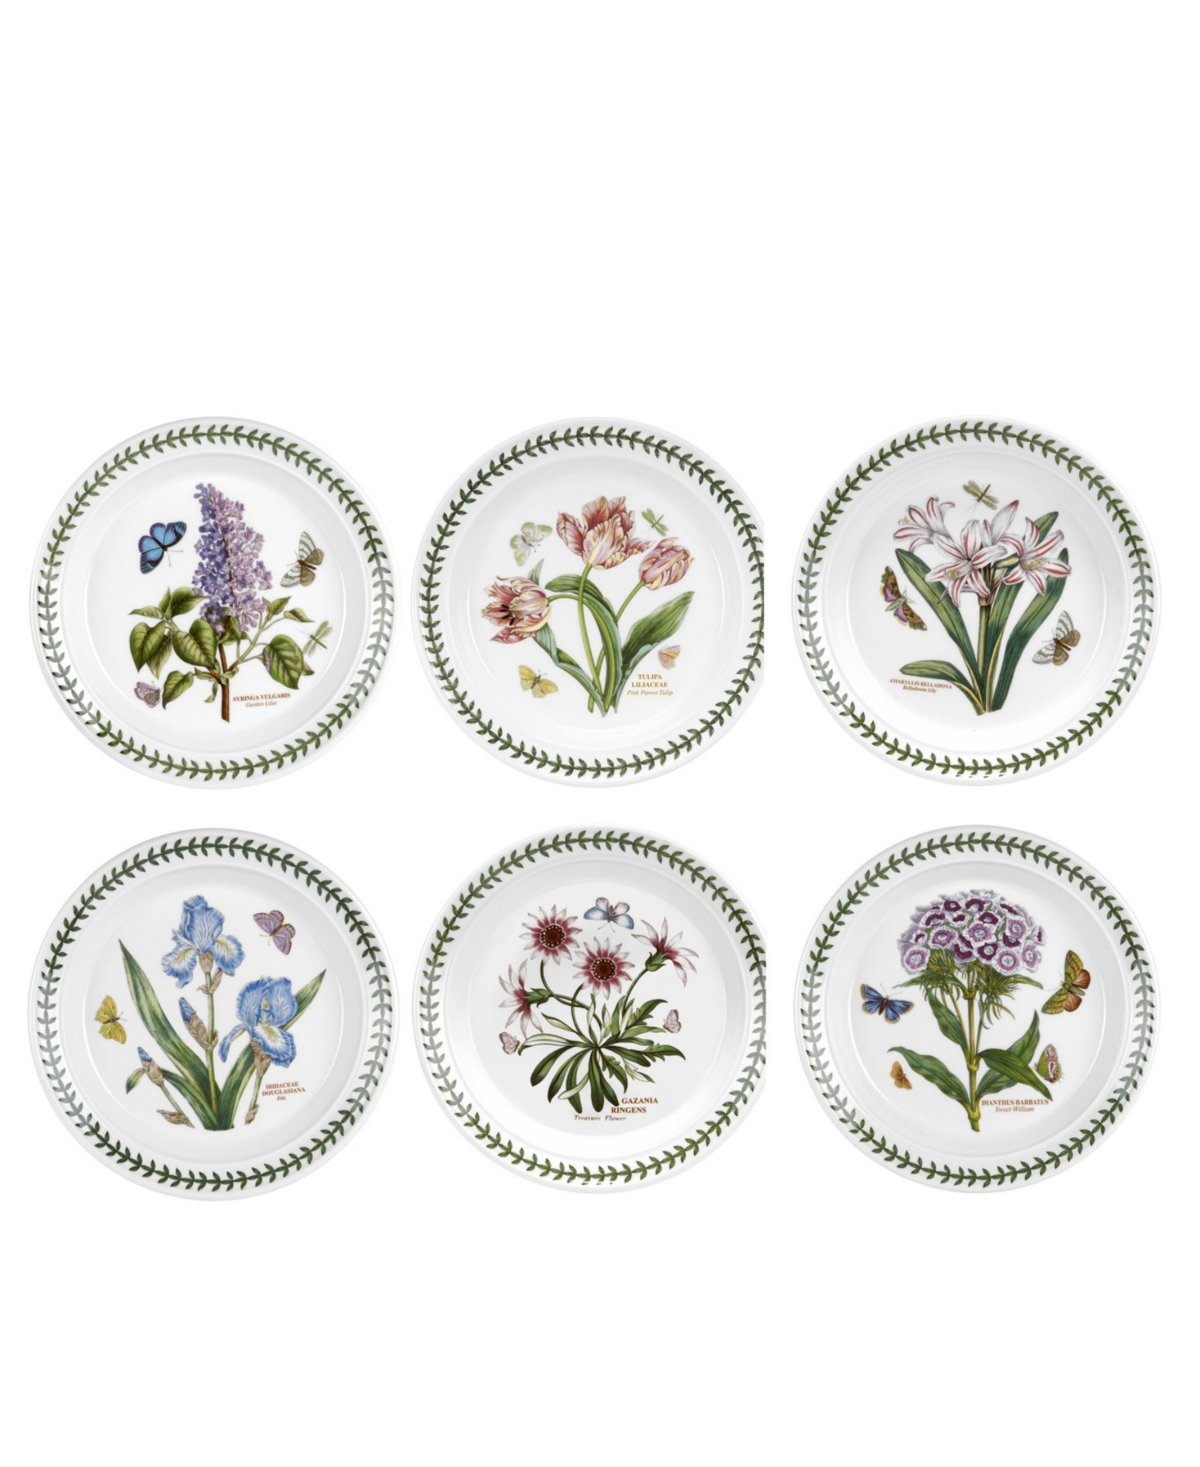 Botanic Garden Assorted Motifs Salad Plate, Set of 6 - White